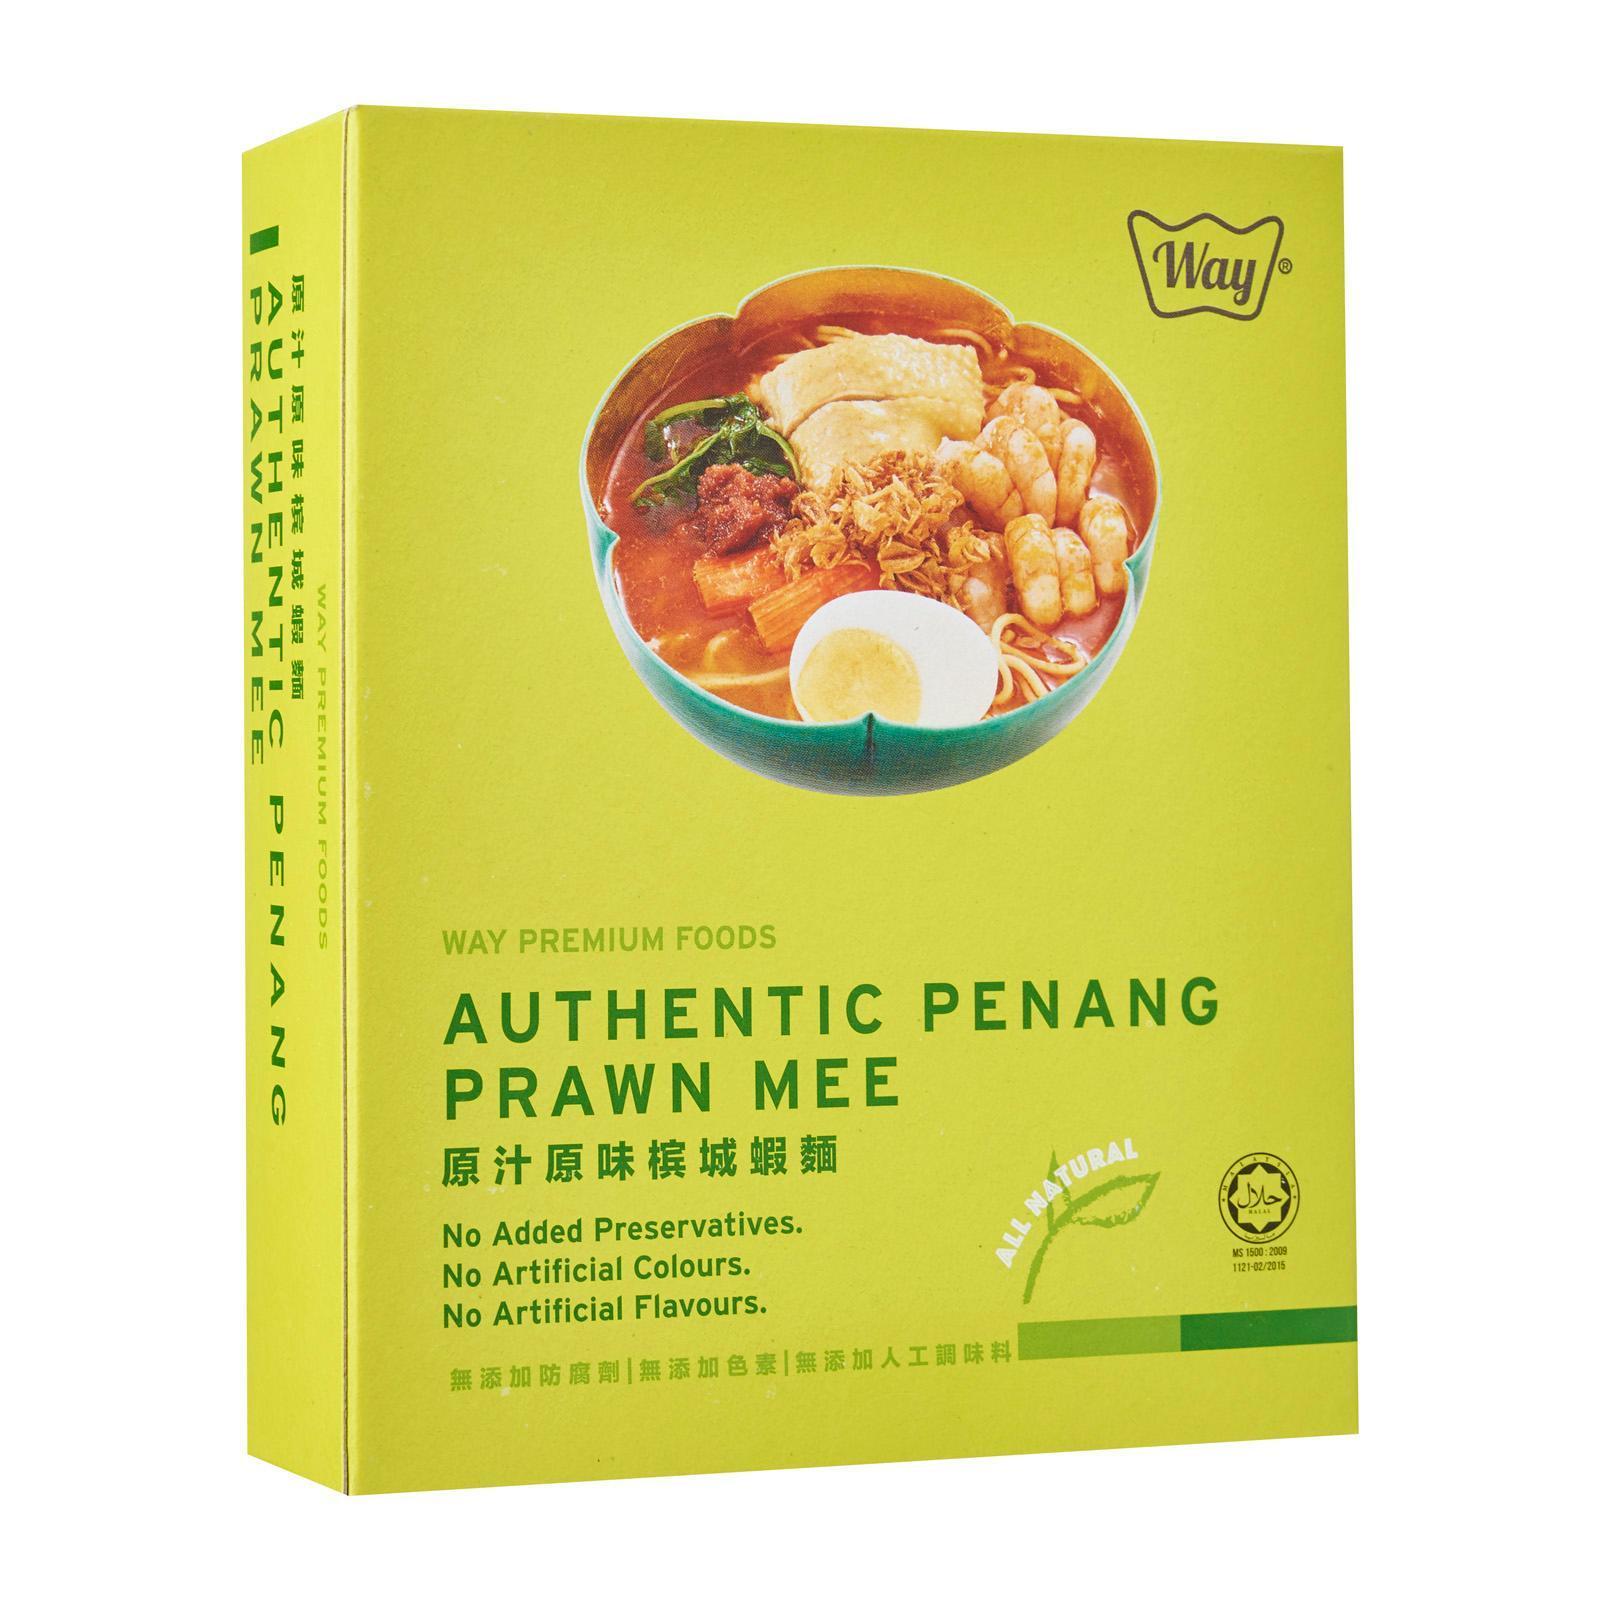 Way Premium Foods Authentic Penang Prawn Mee Instant Noodle 120g